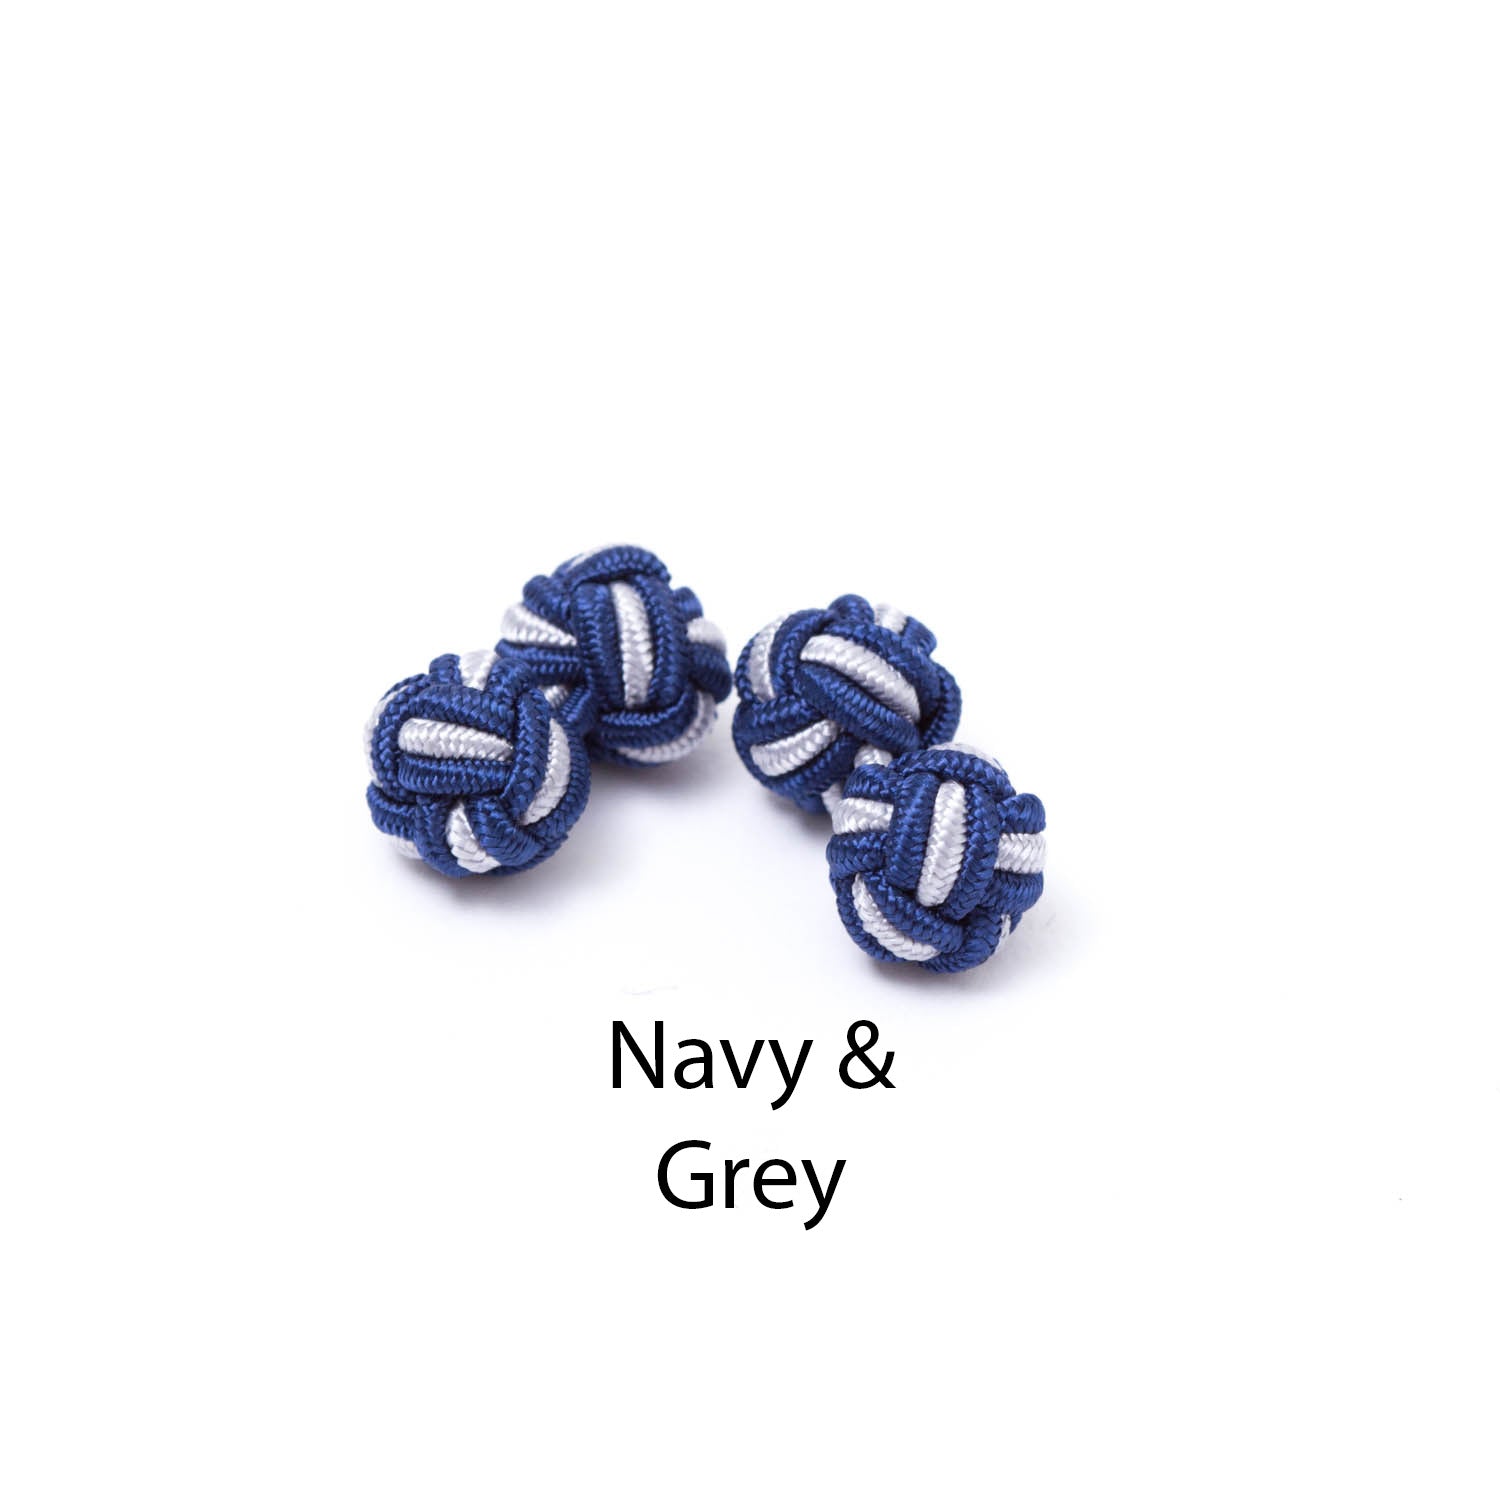 Navy & grey Dual Colored Knot Cufflinks by KirbyAllison.com.